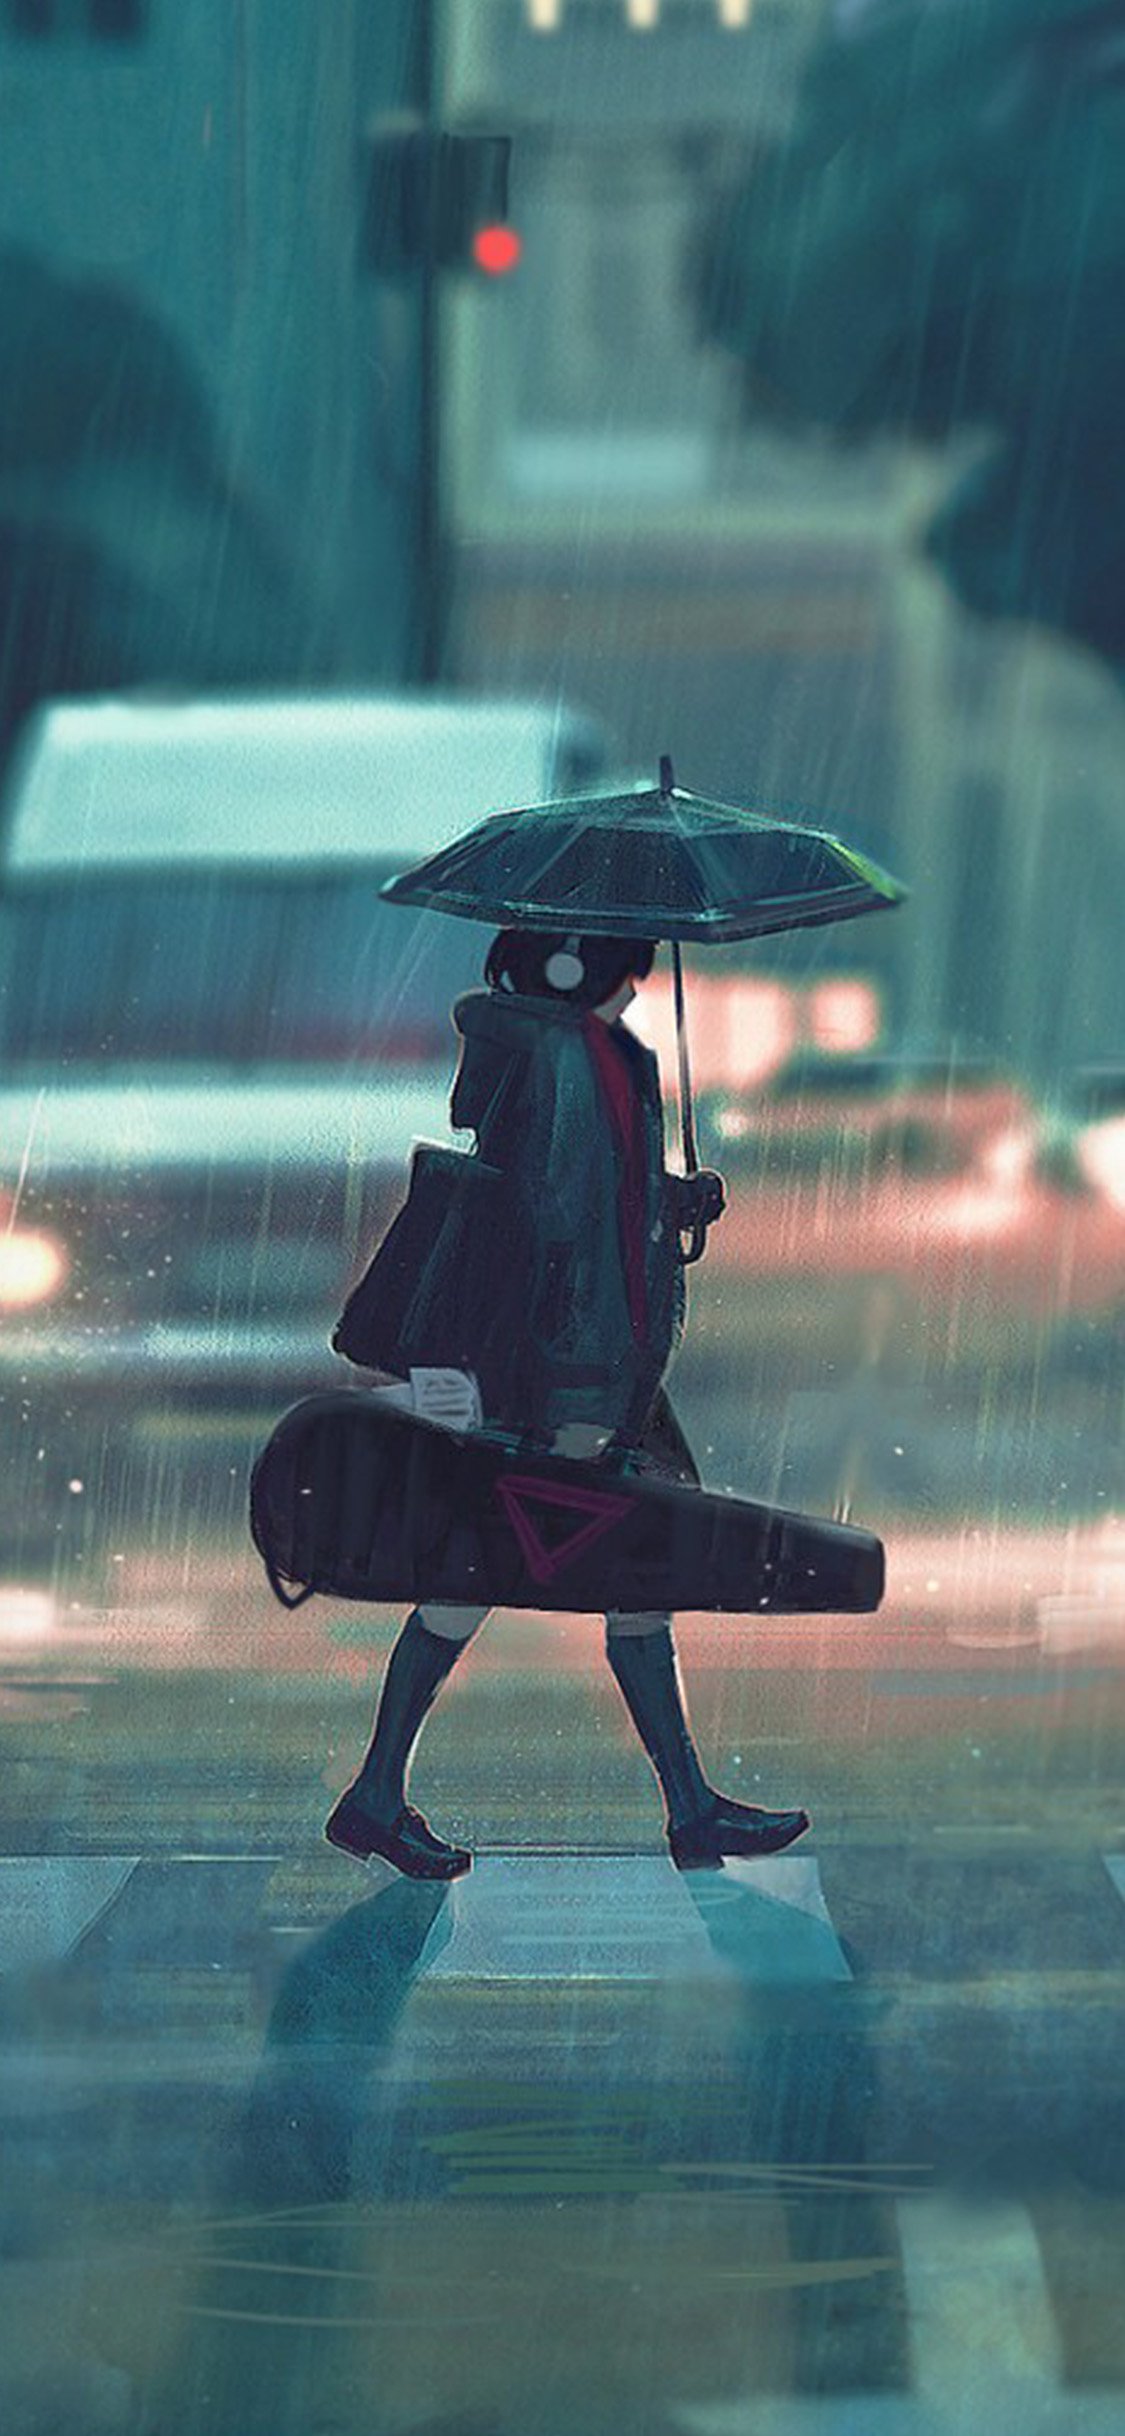 Rainy Day Anime Paint Girl iPhone X Wallpaper